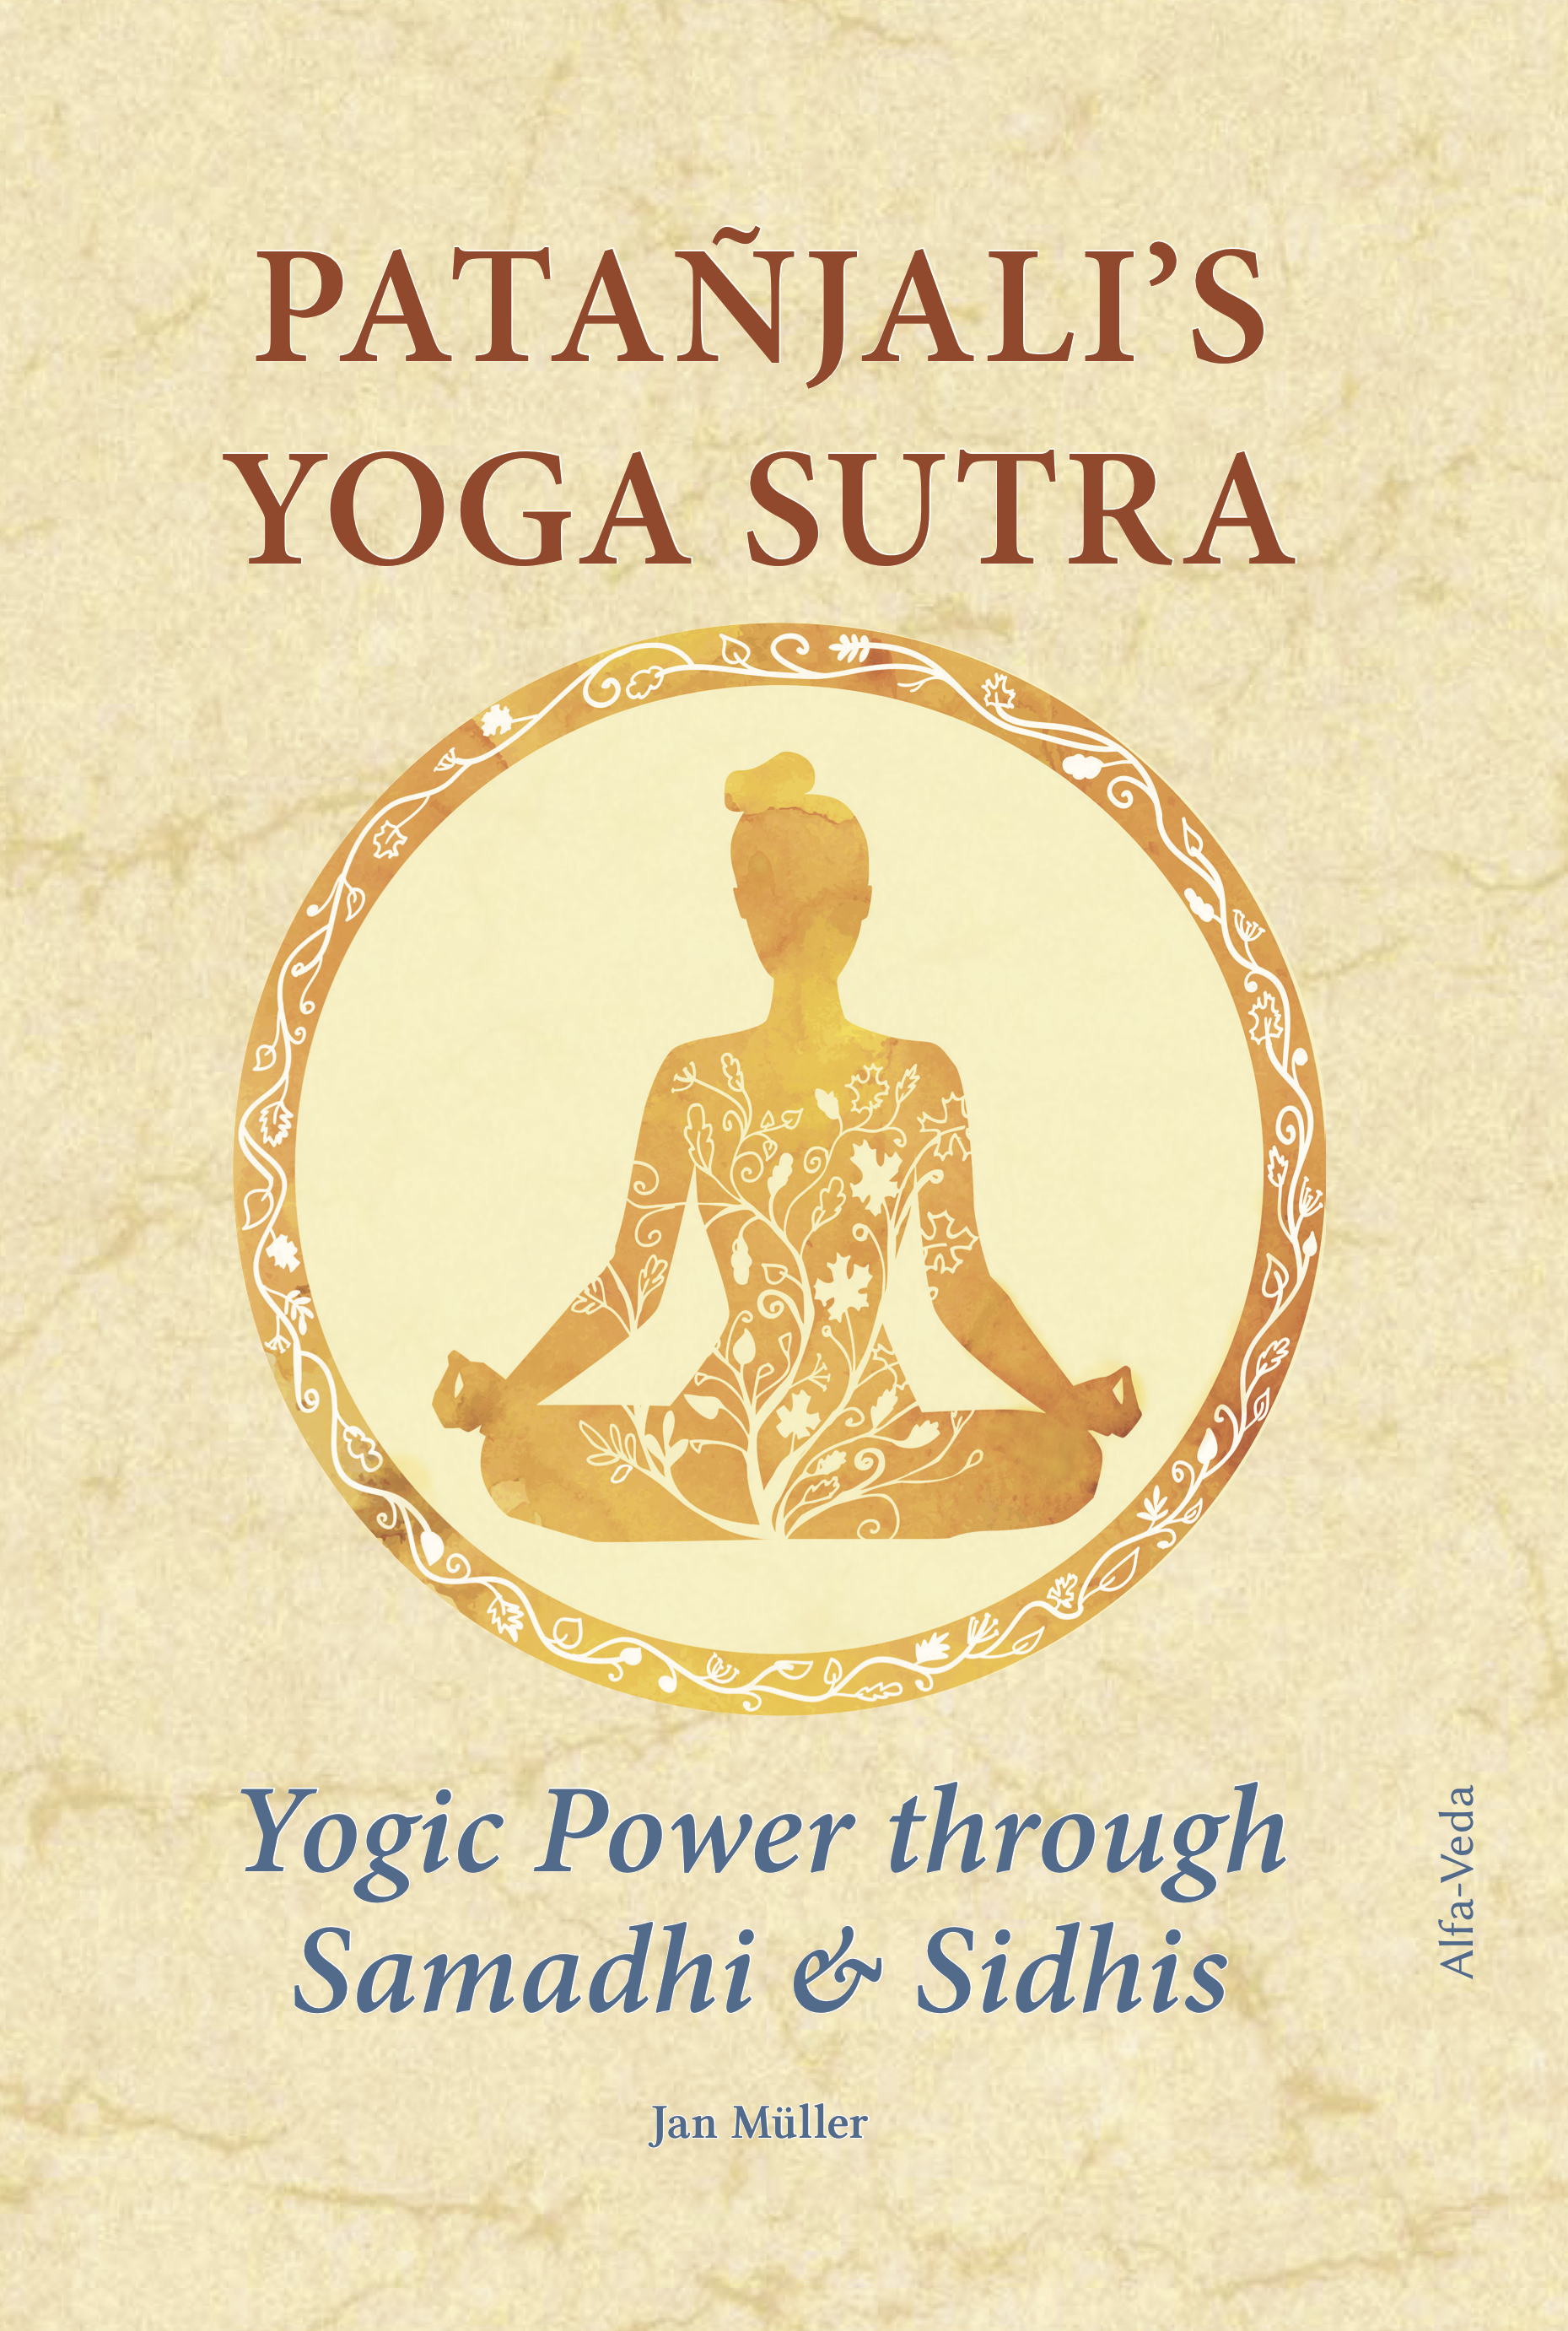 Patajalis Yoga-Sutra: Yogakraft durch Samadhi und Sidhis